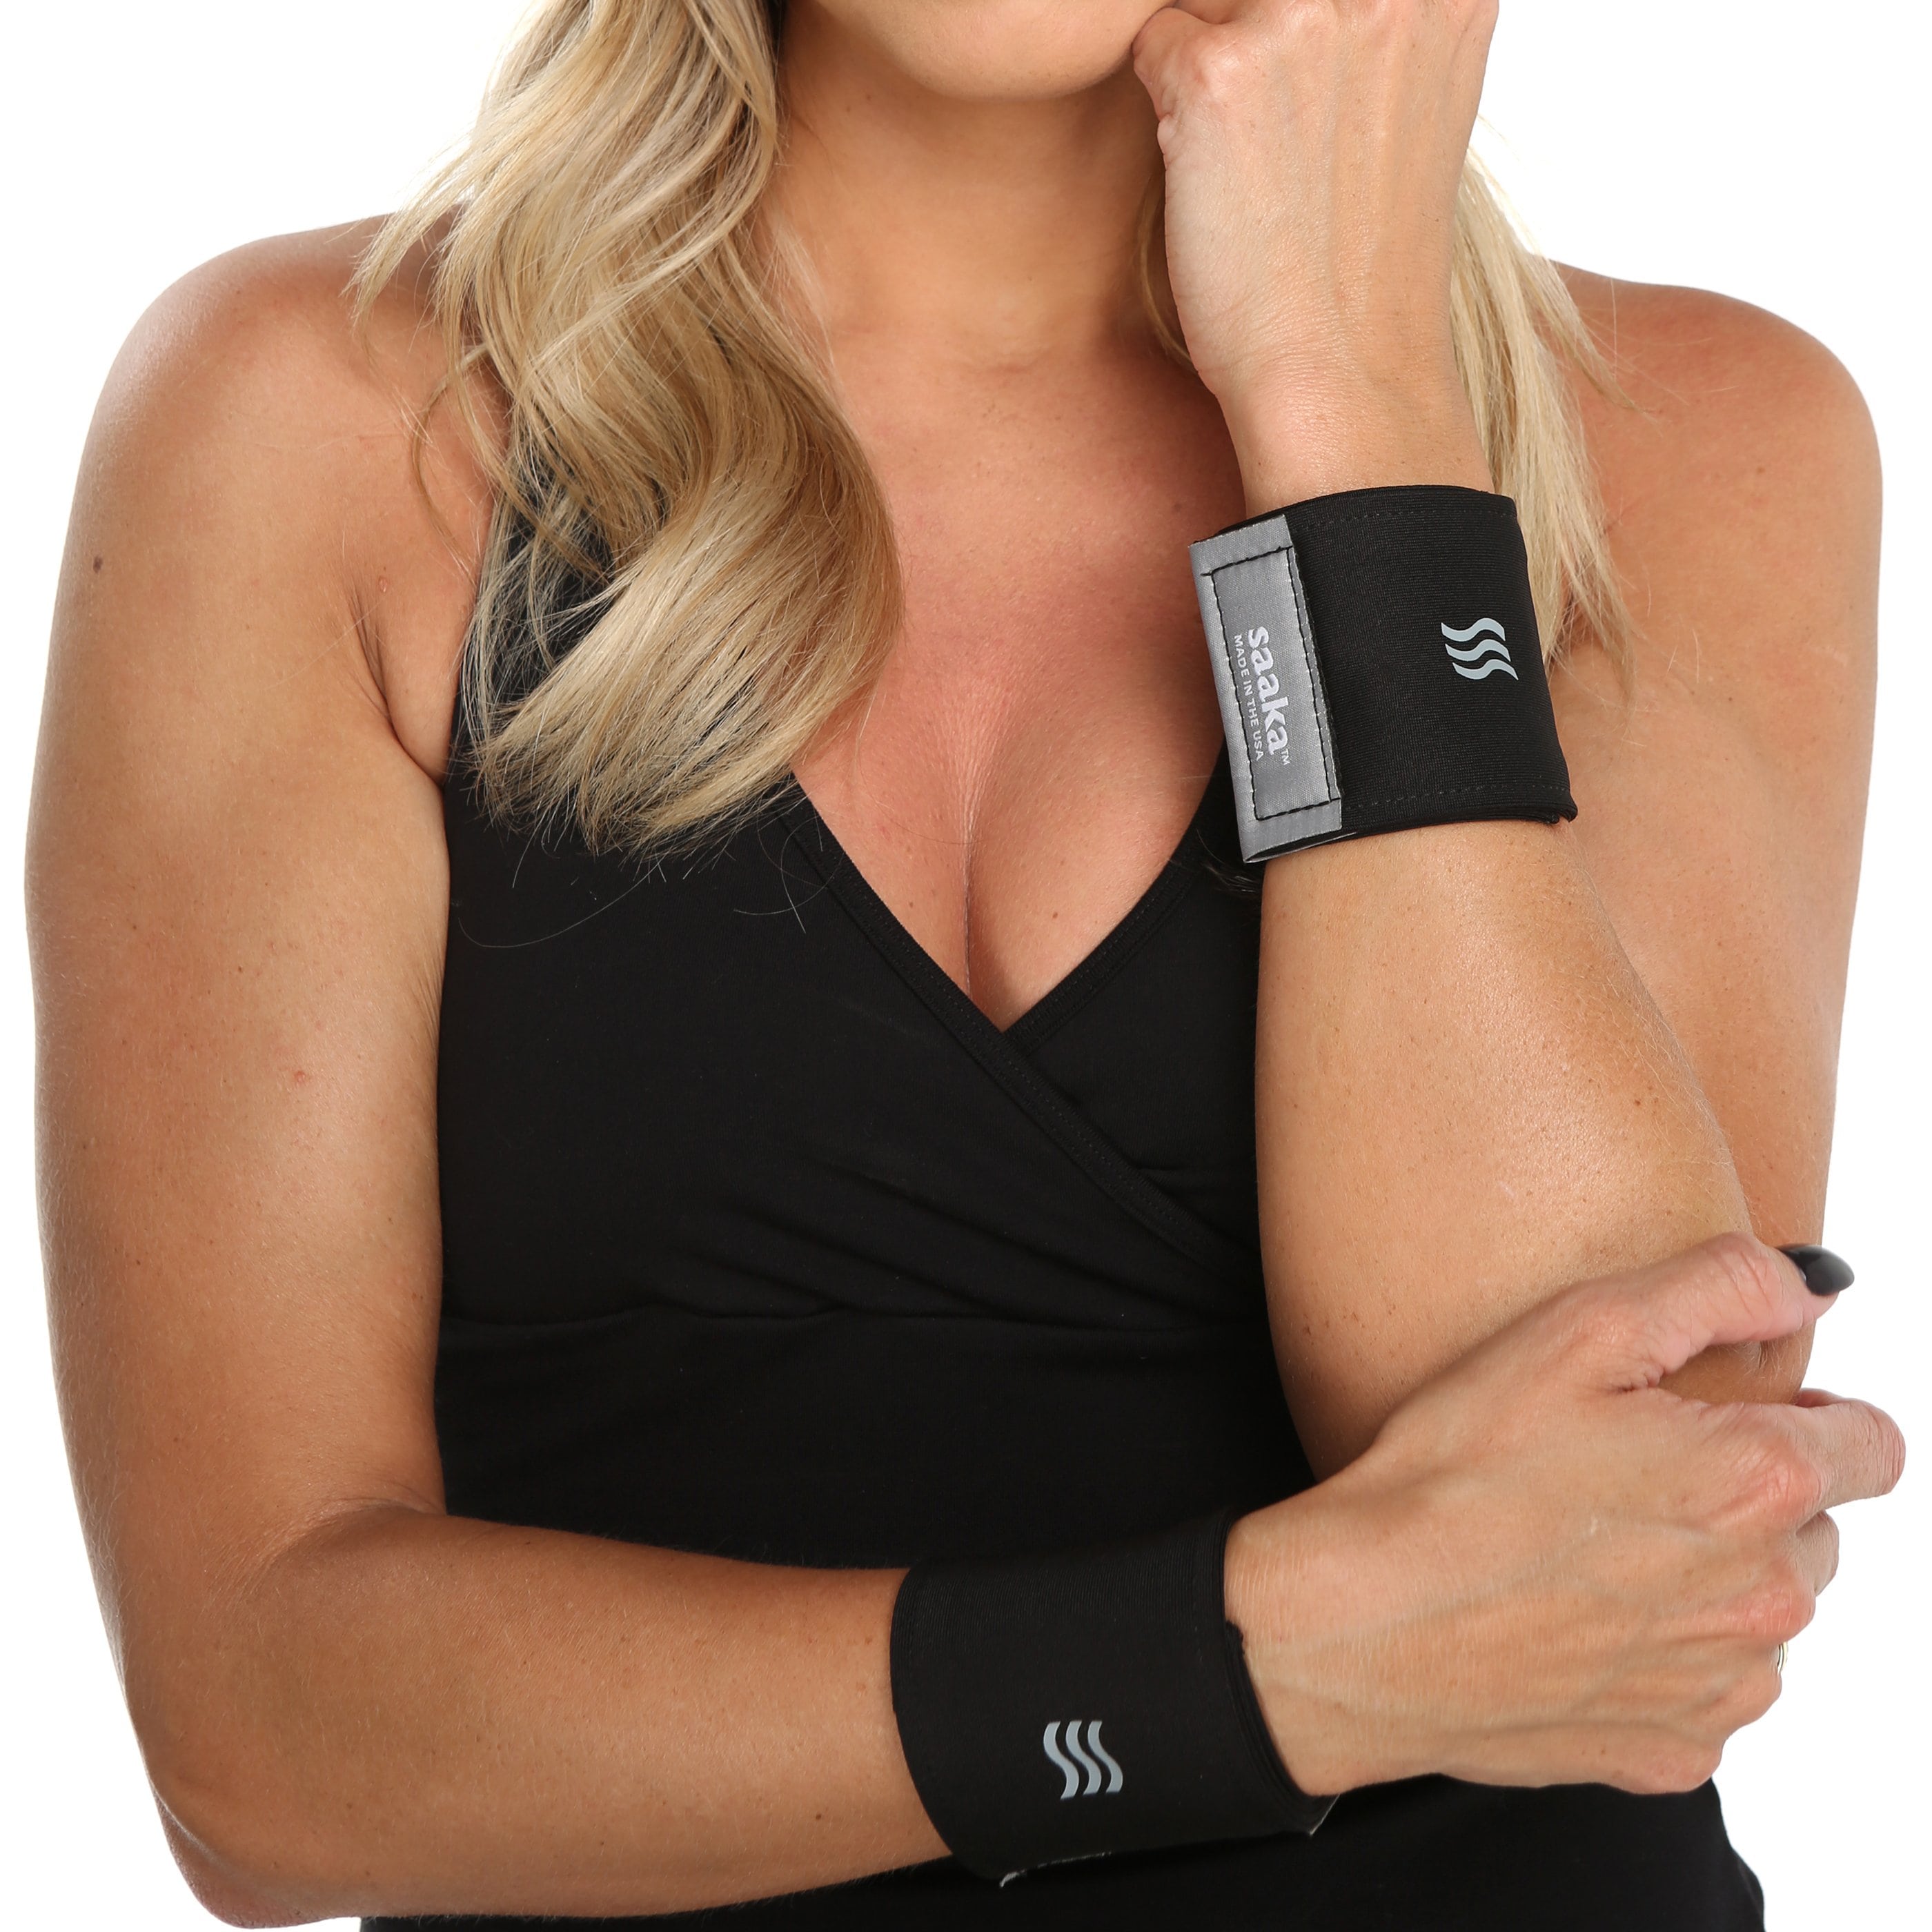 Women wearing workout wristbands for sweat.